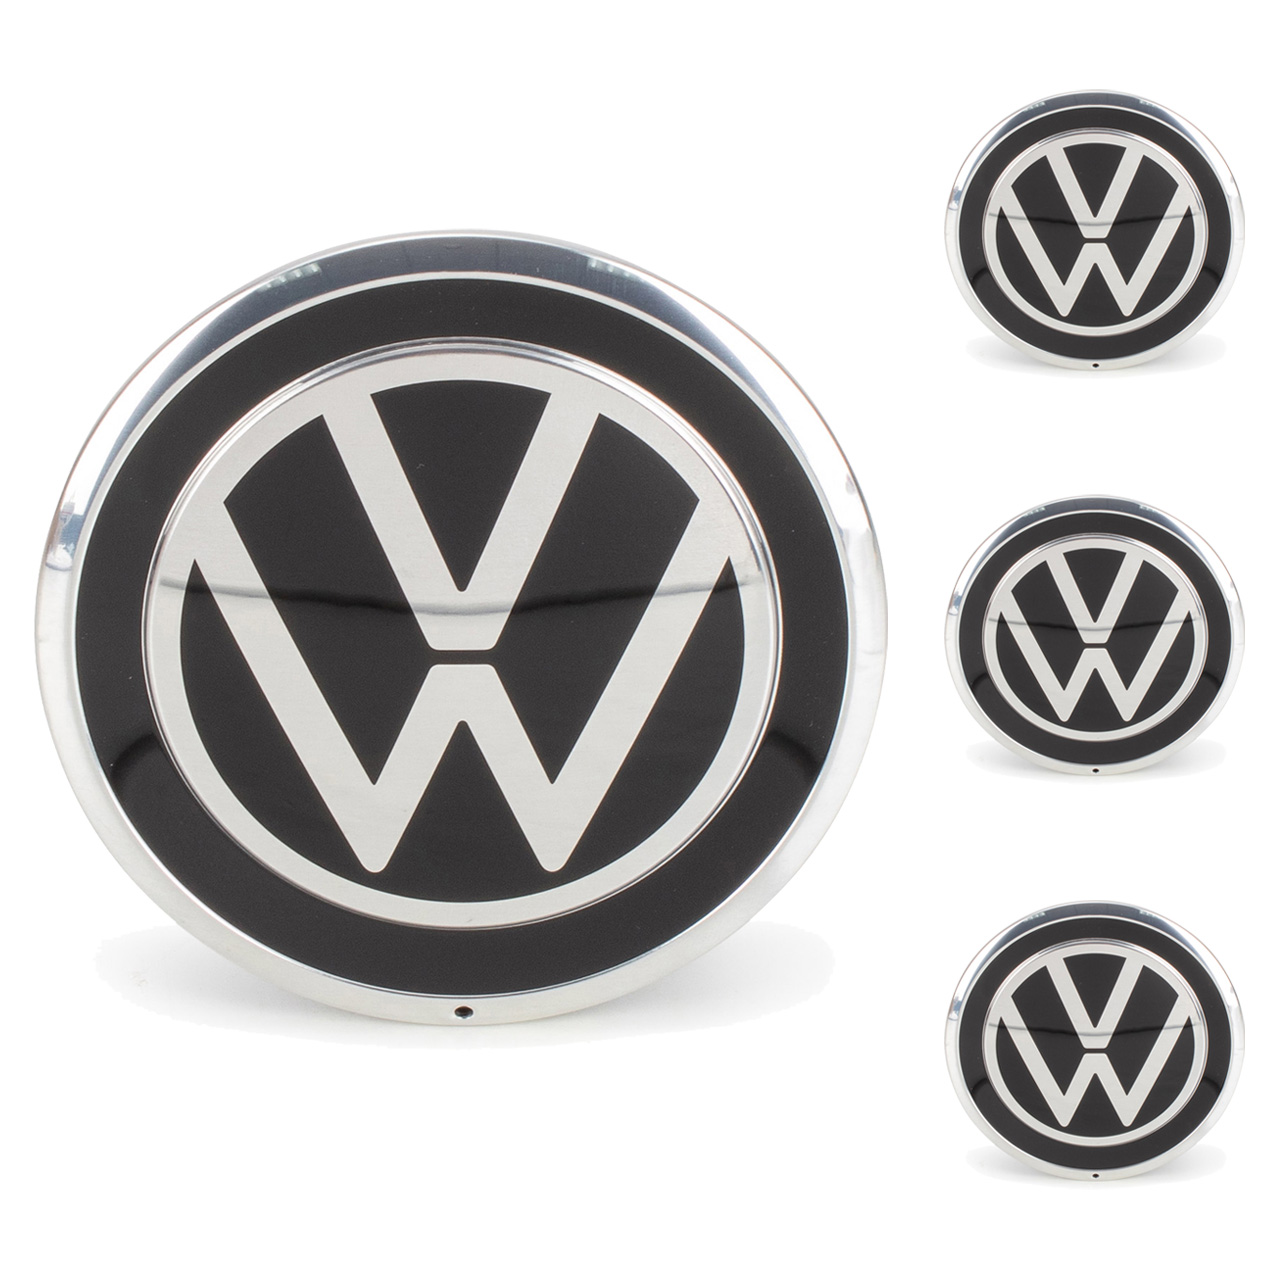 Original VW up! Radzierkappe Blende Abdeckung Kappe Nabenkappe silber/weiß